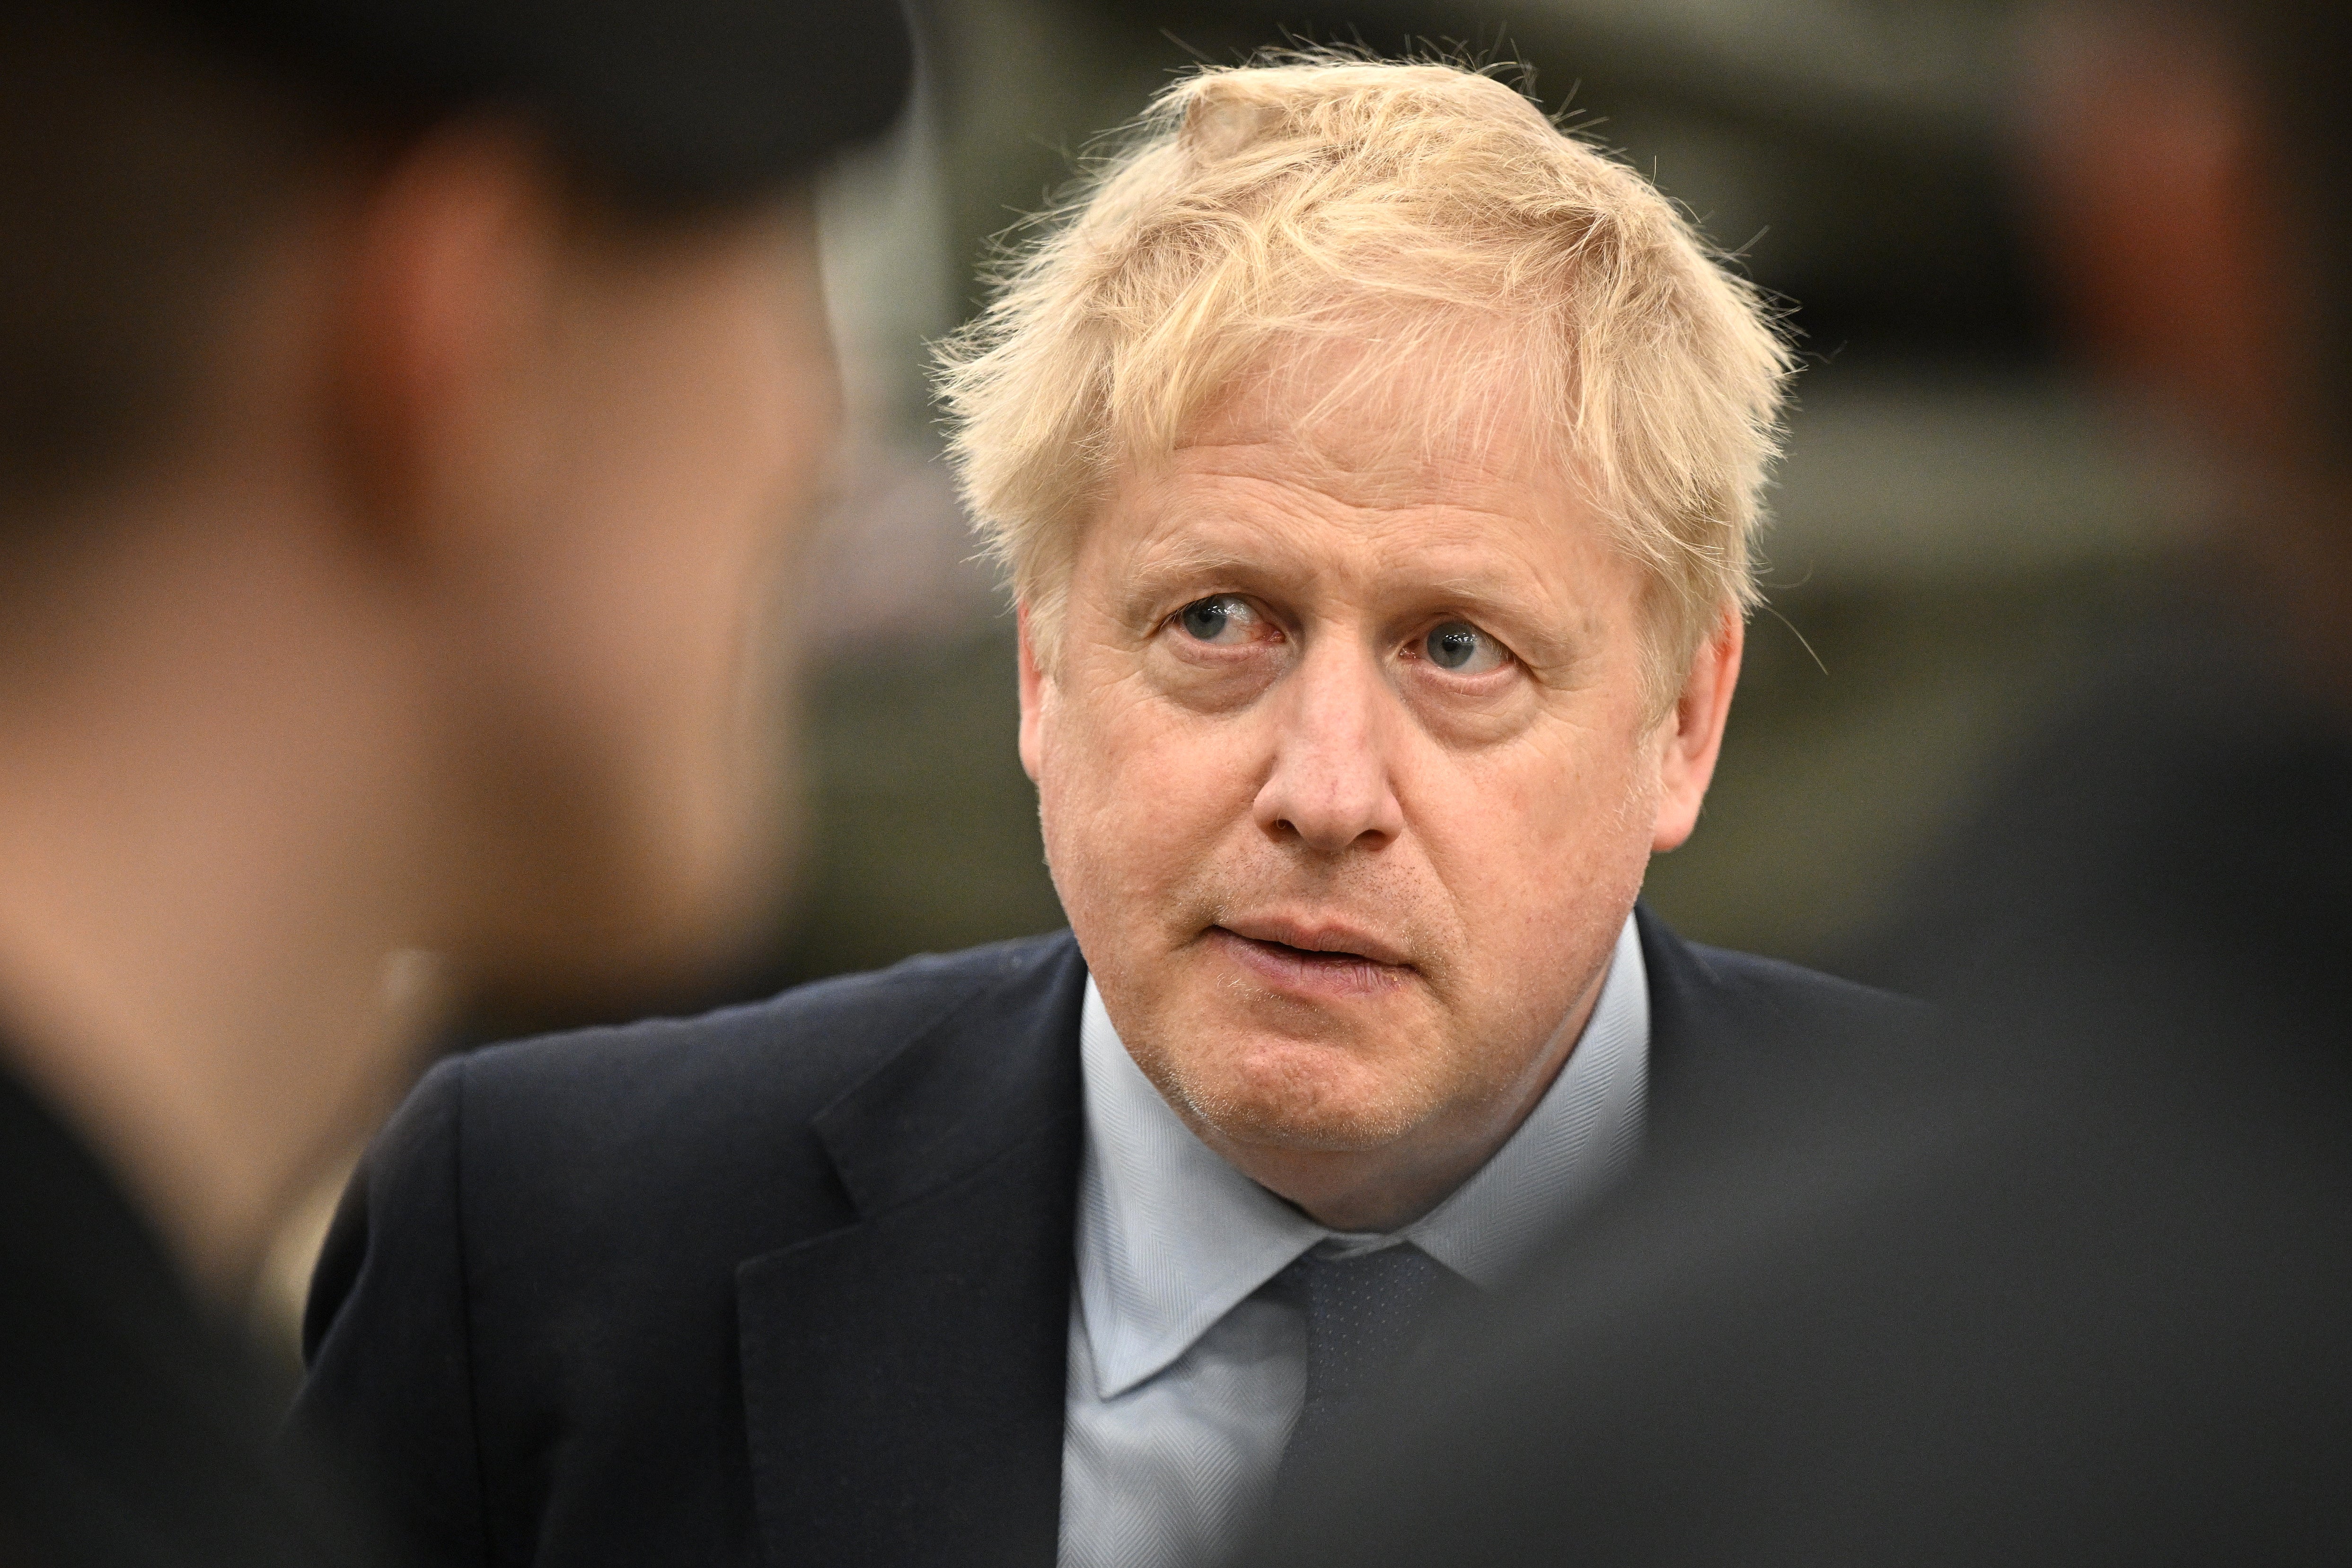 Boris Johnson has responded to Vladimir Putin’s aggression with energy and leadership